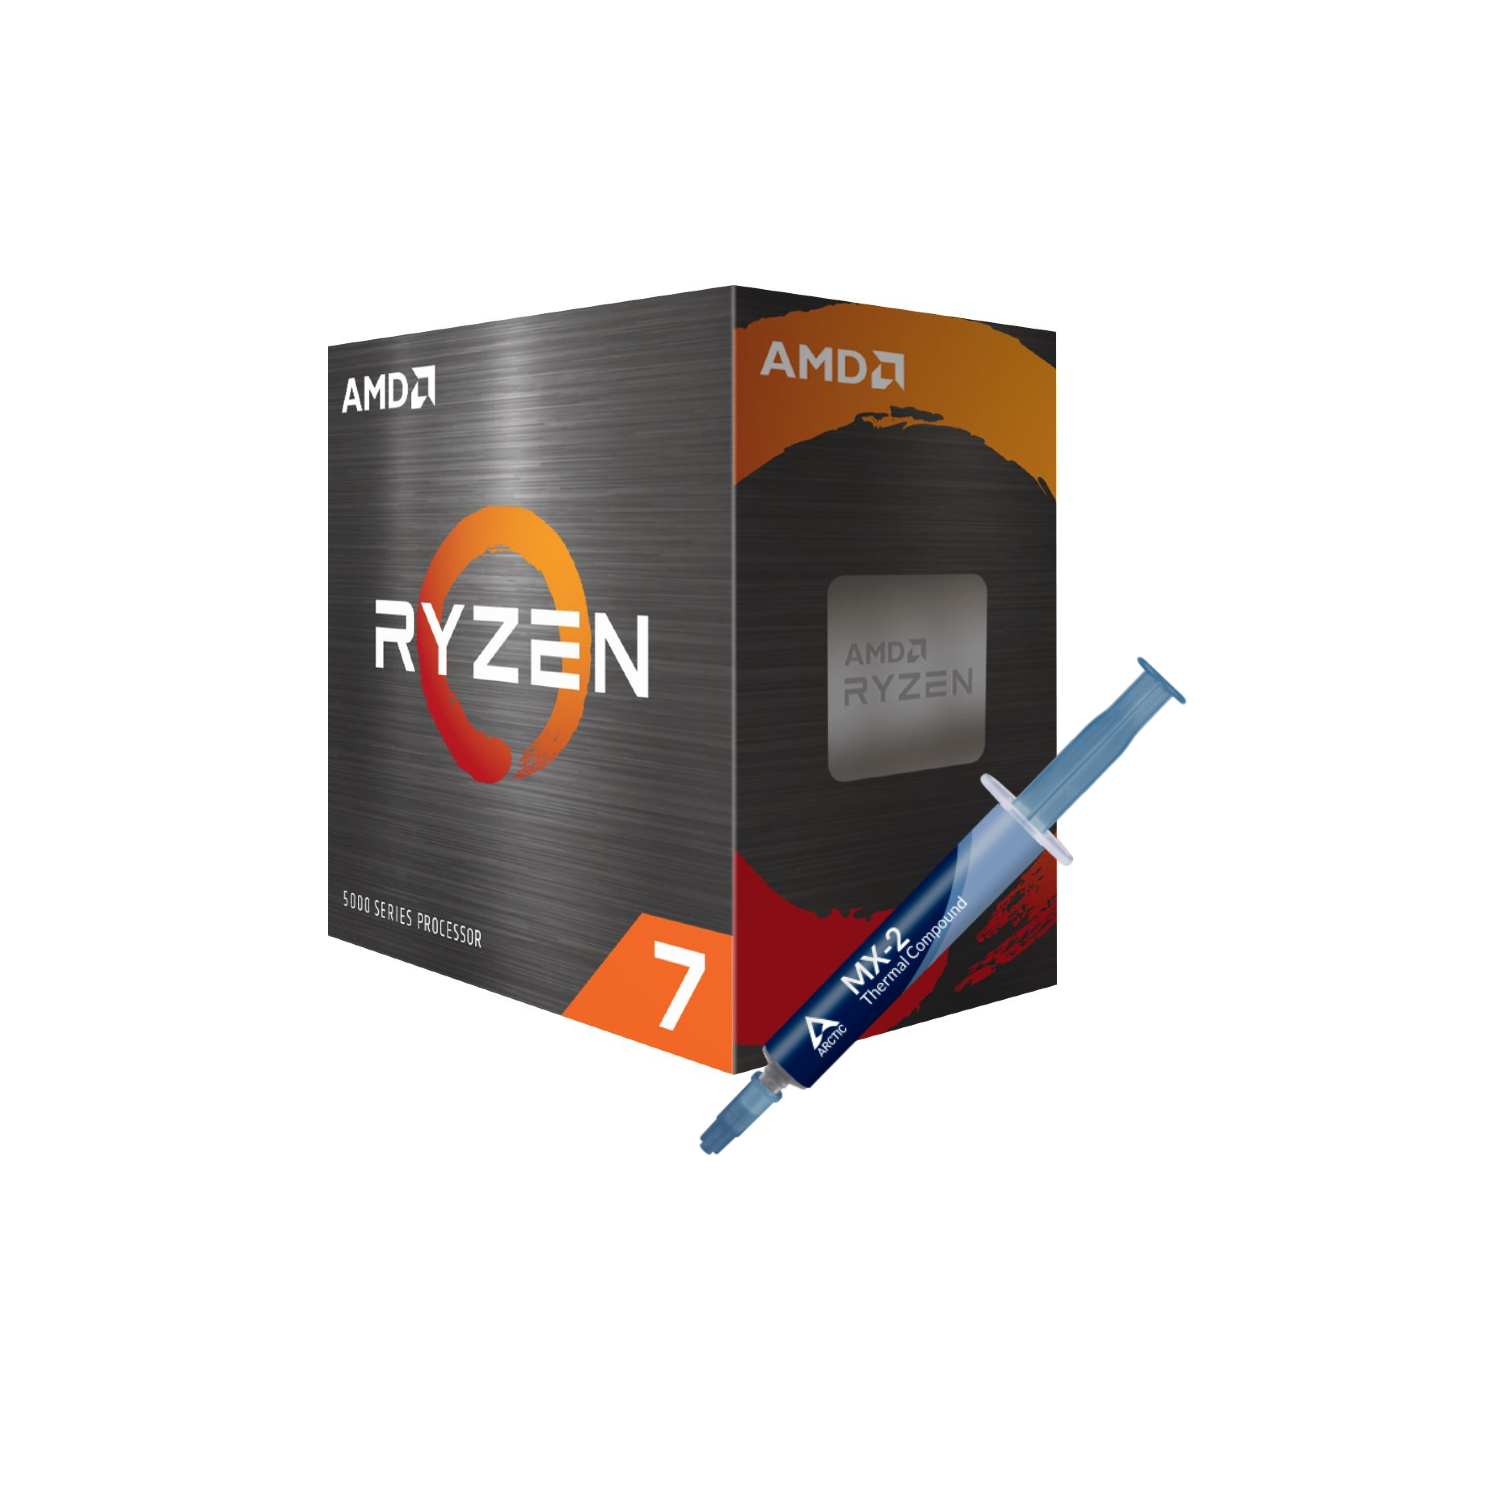 AMD Ryzen 7 5800X 4th Gen 8-core, 16-threads Unlocked Desktop Processor Without Cooler + Arctic MX-2 Thermal Compound 4g